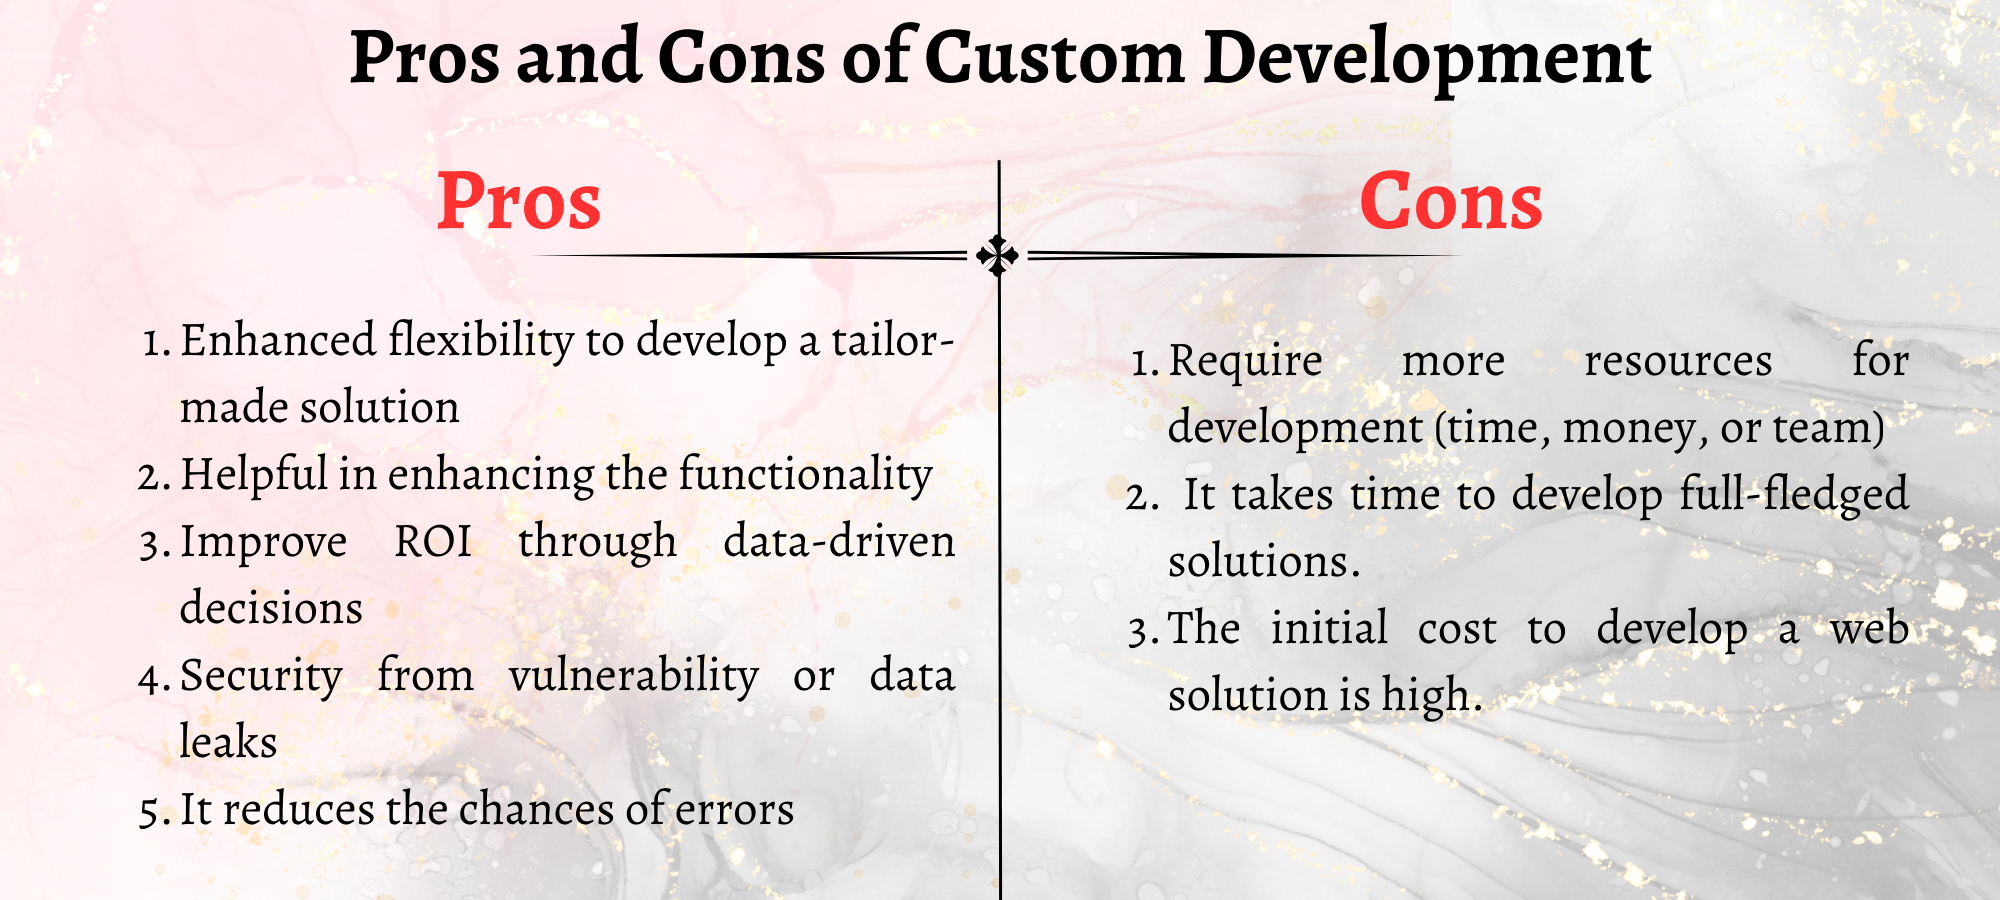 Pros and Cons of Custom Development